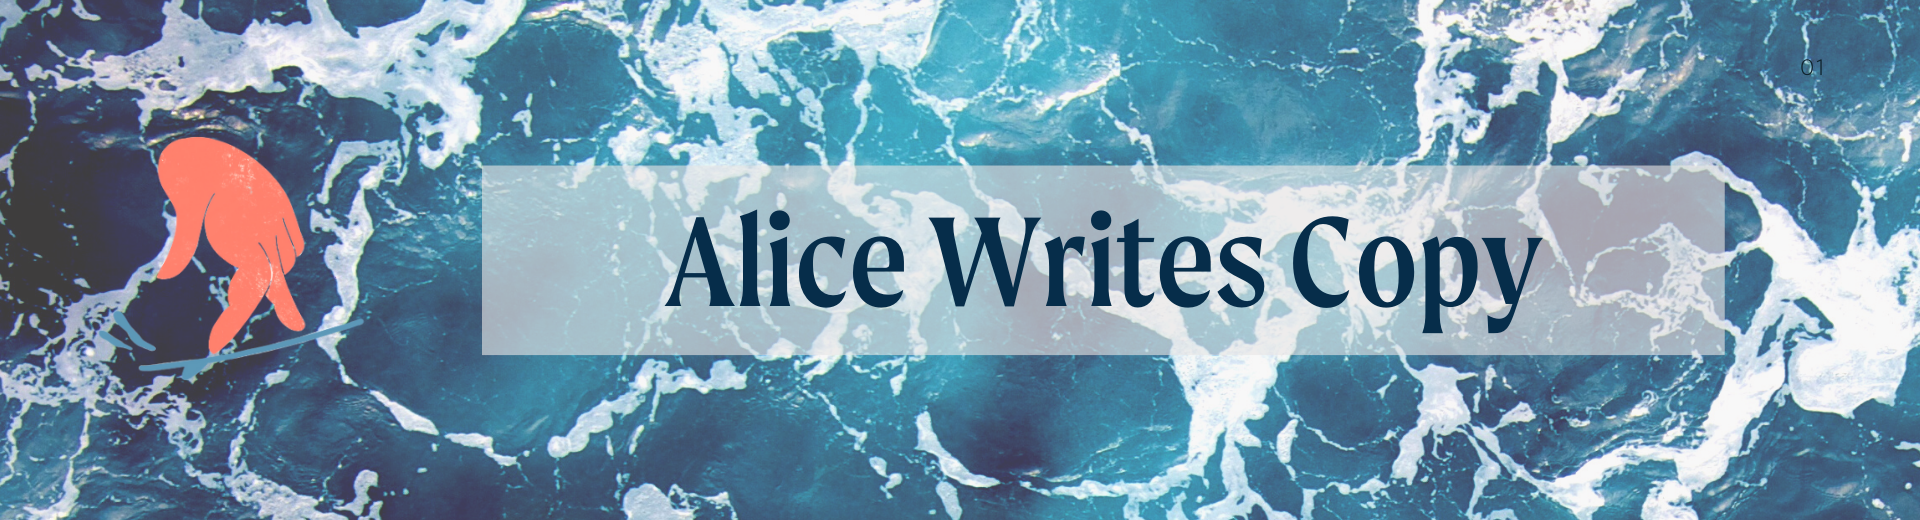 Alice Writes Copy banner